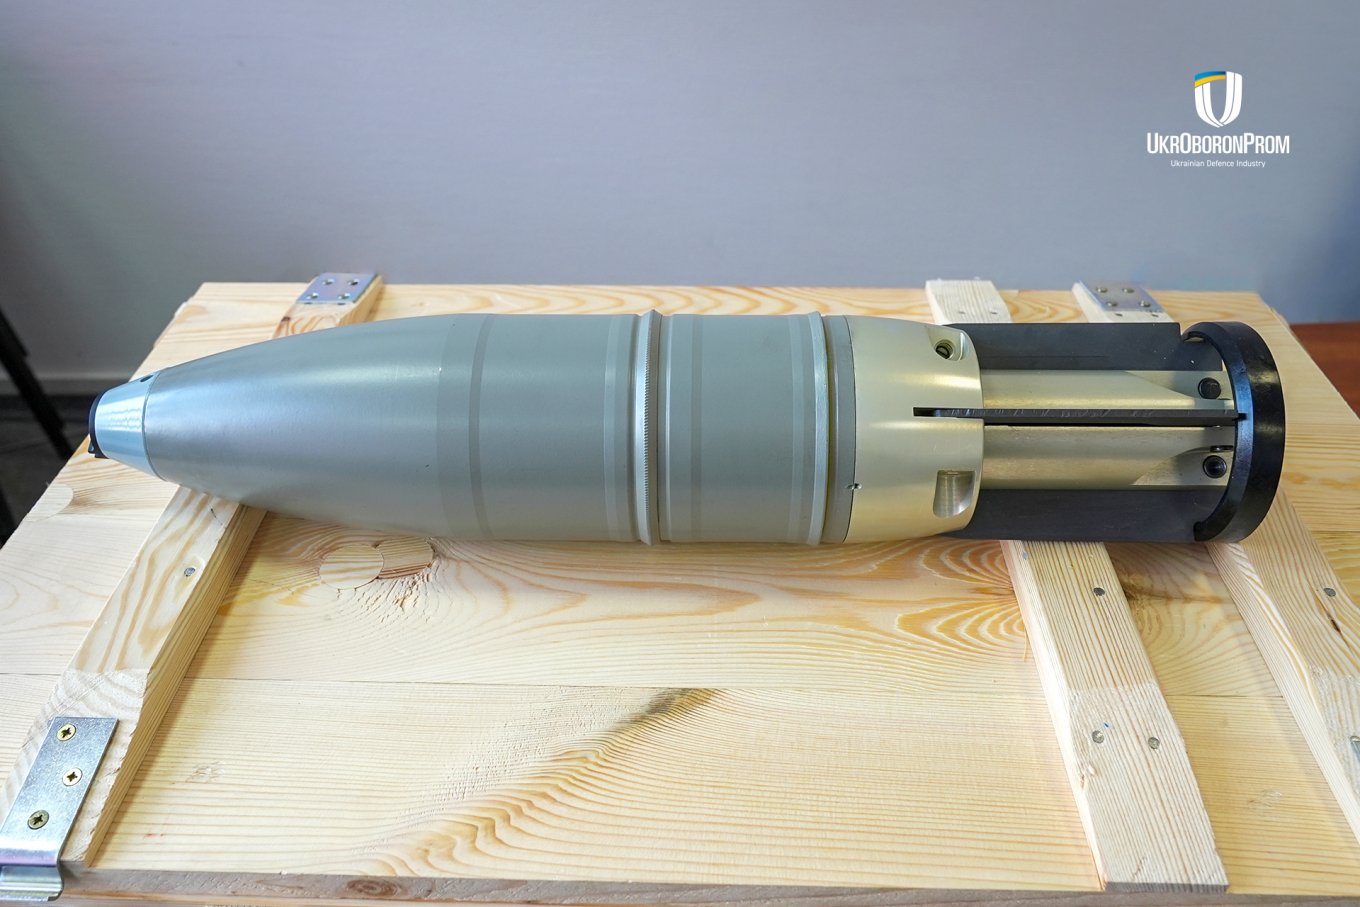 Newly-made 125mm tank shell